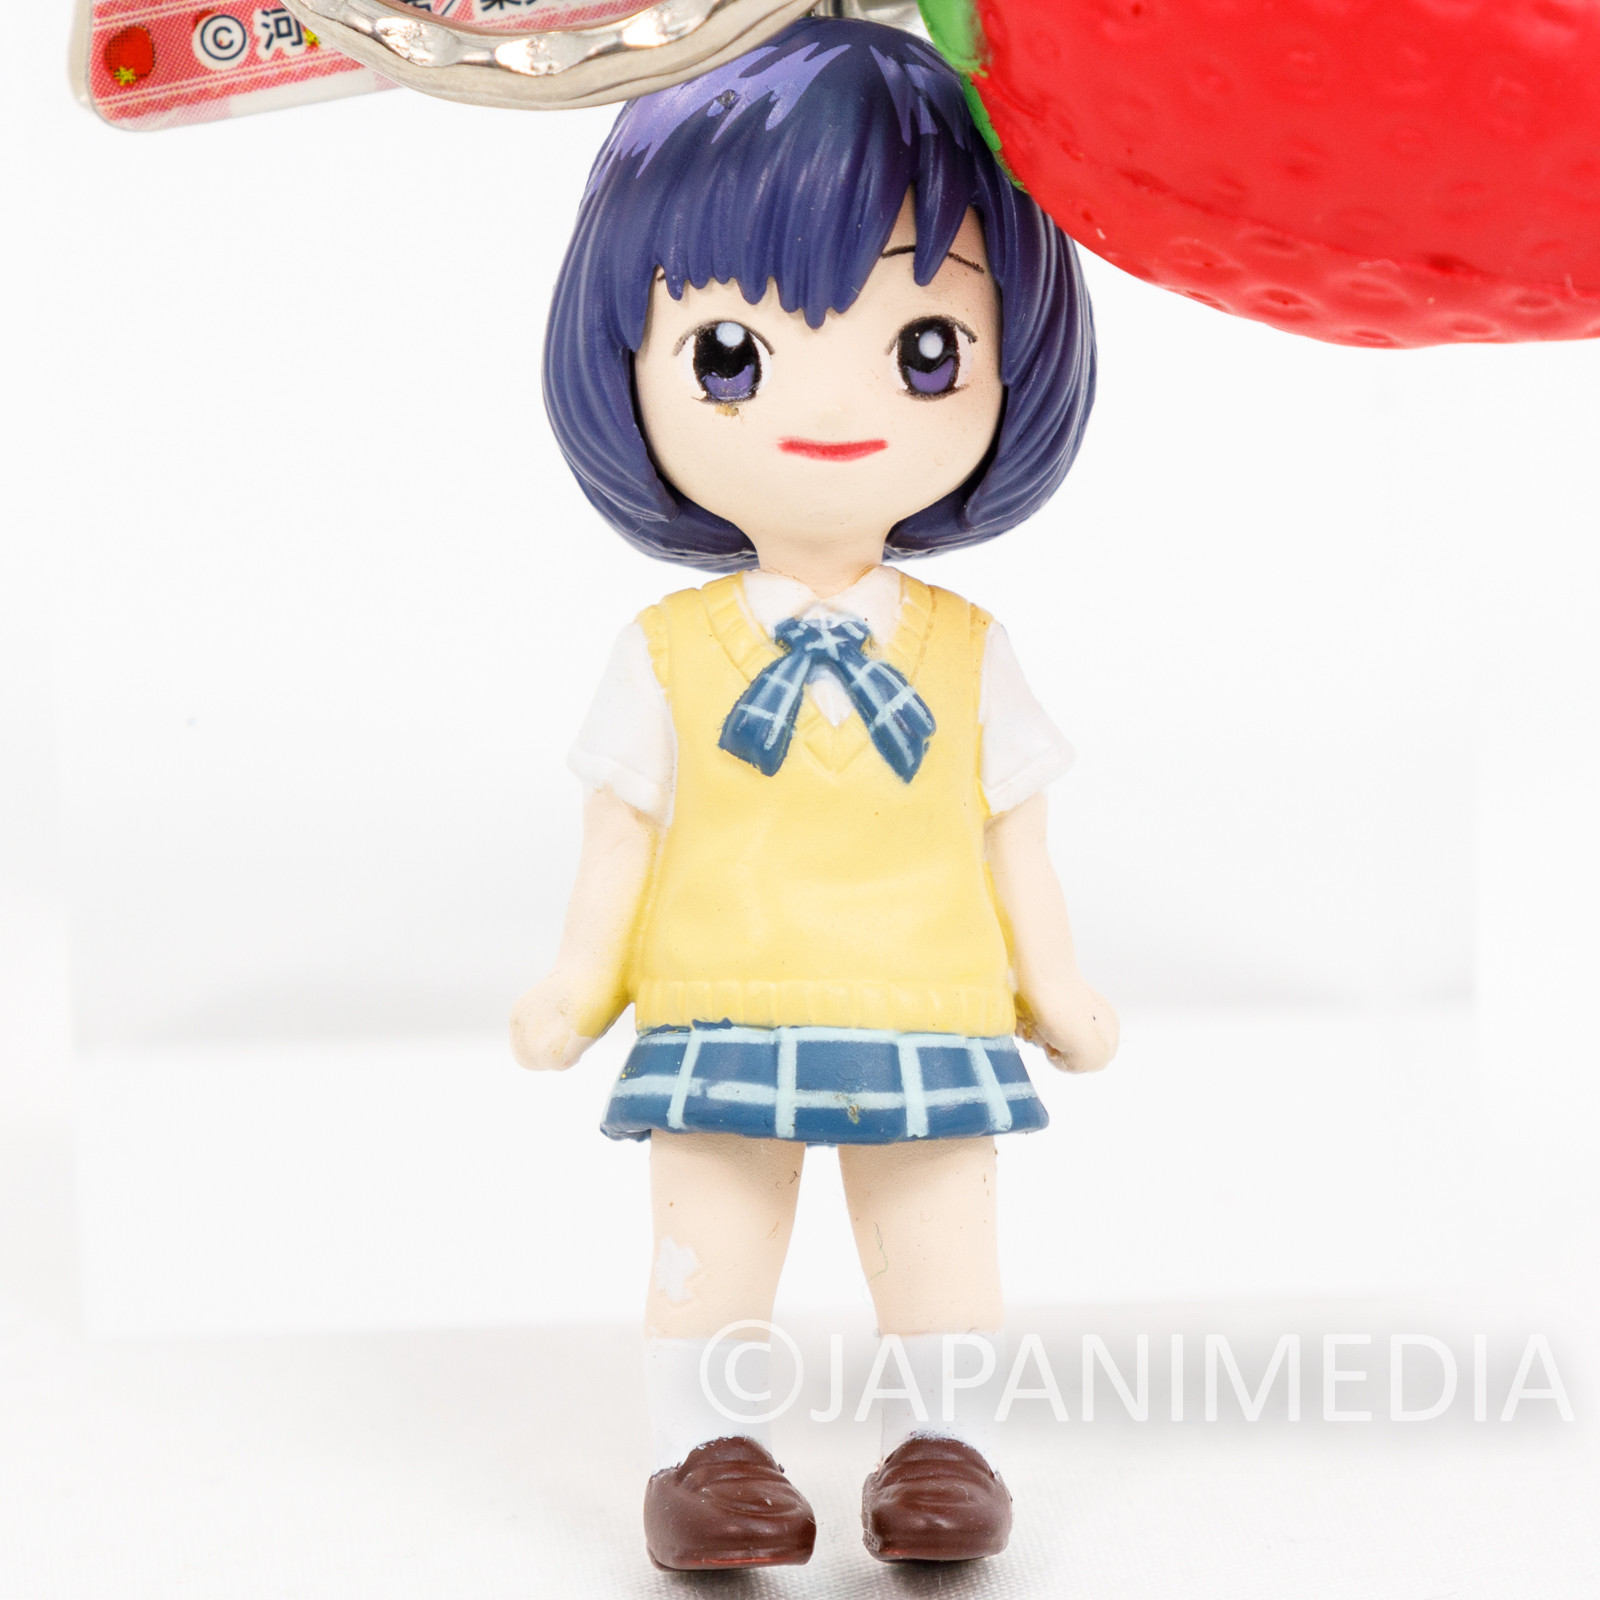 Strawberry Ichigo 100% Yui Minamito Figure Keychain JAPAN ANIME MANGA